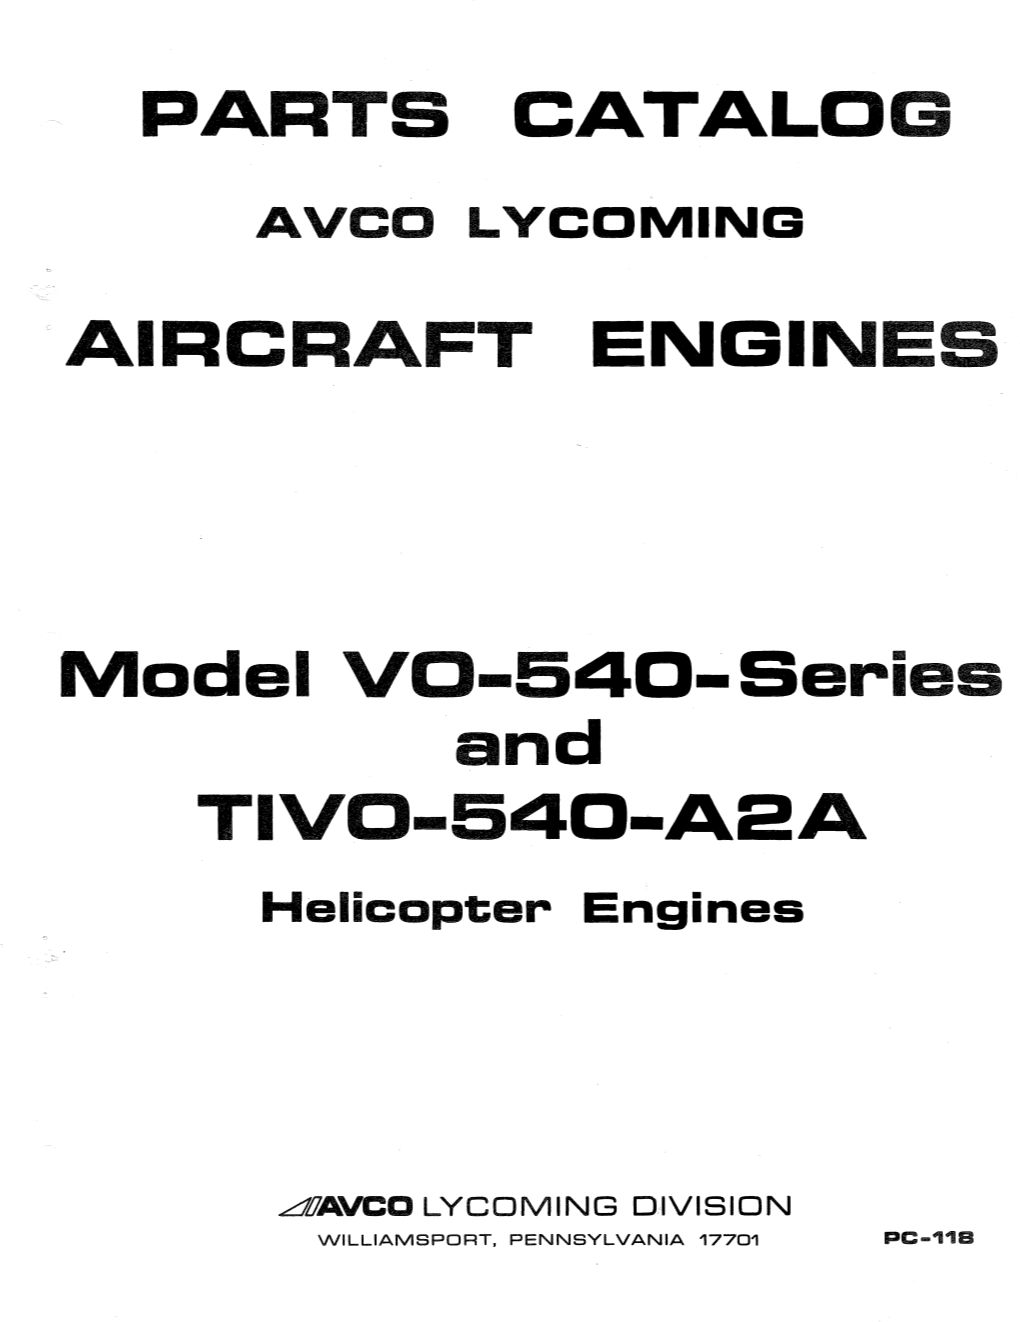 PARTS CATALOG AIRCRAFT ENGINES Lviadel VO-54D-Series